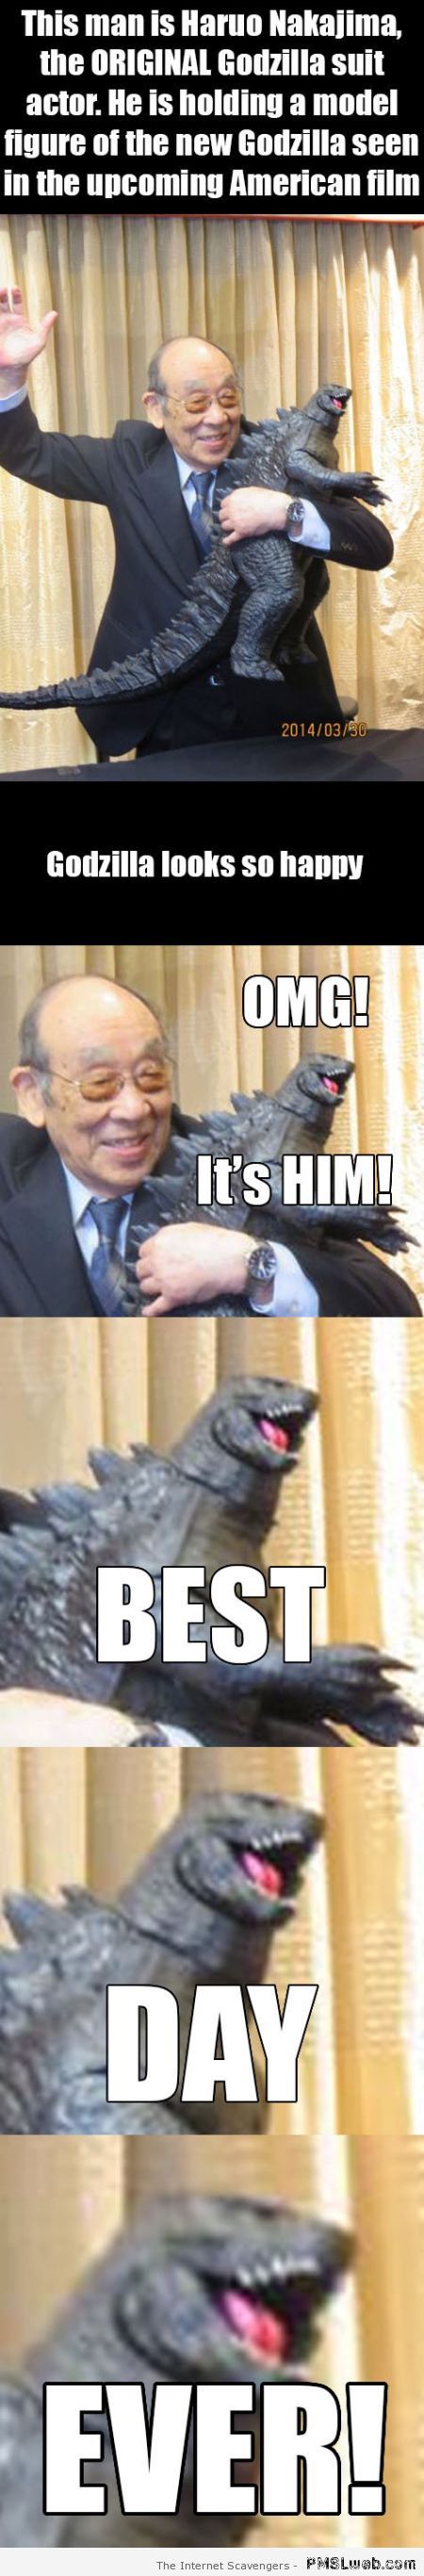 Original Godzilla suit actor meme at PMSLweb.com